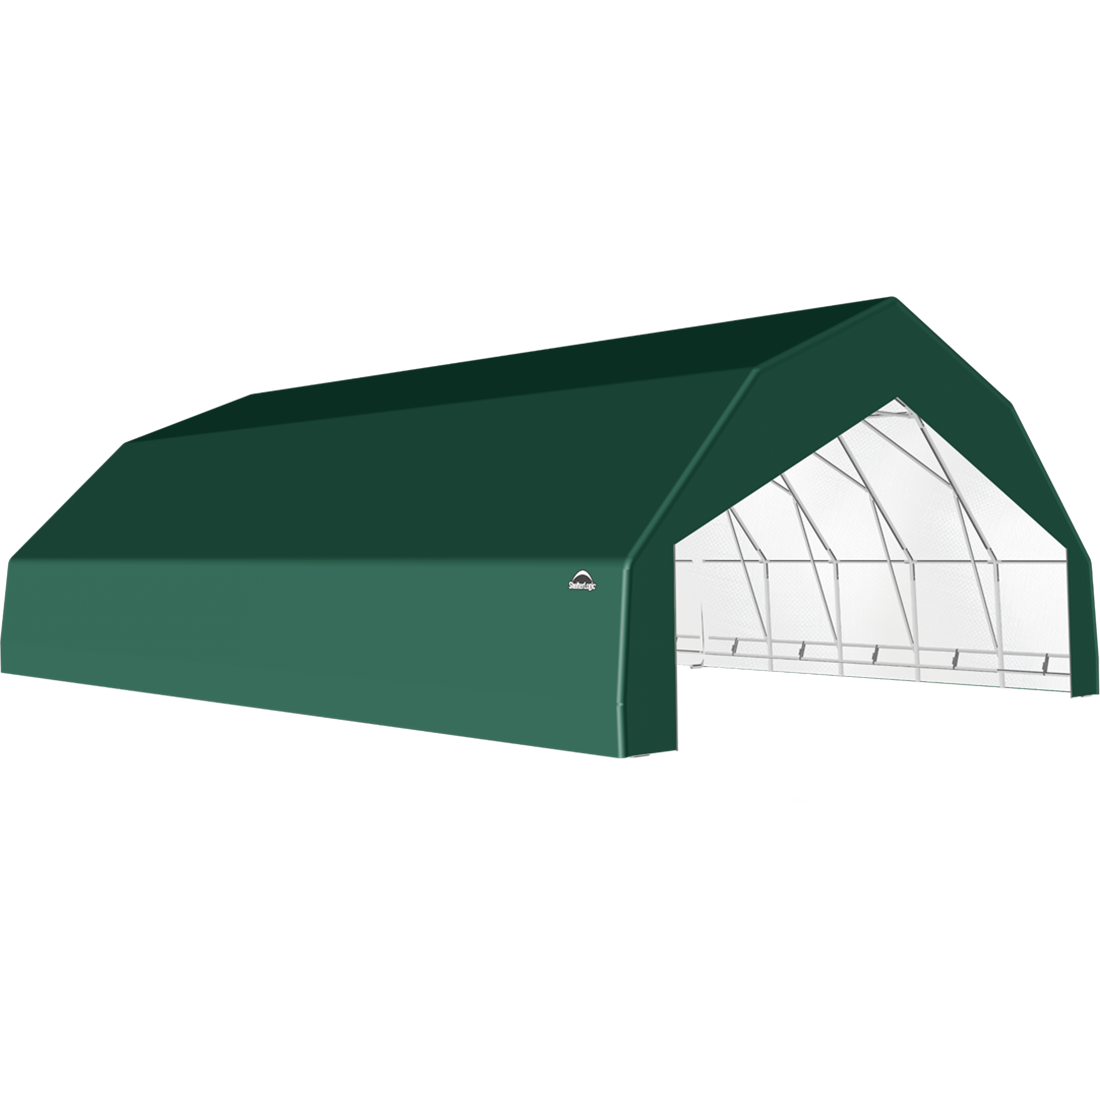 ShelterTech SP Series Barn Shelter, 30 ft. x 32 ft. x 15 ft. Heavy Duty PVC 14.5 oz. Green